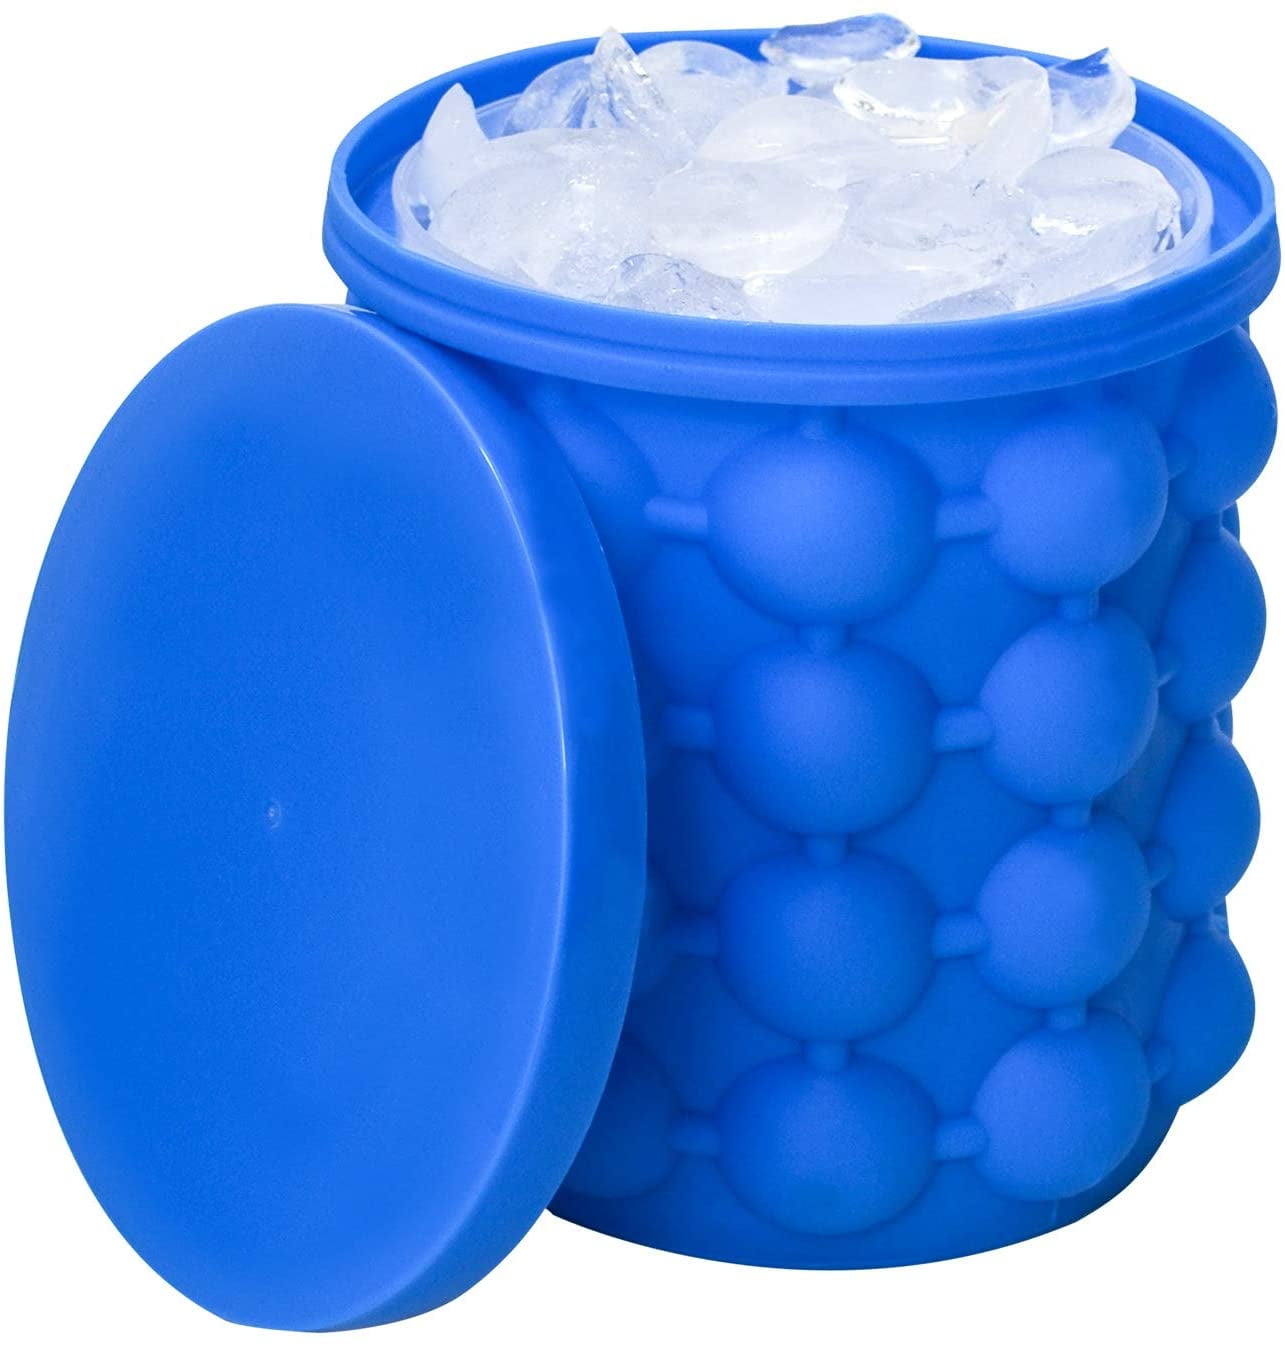 Amscan Plastic Ice Bucket - Blue